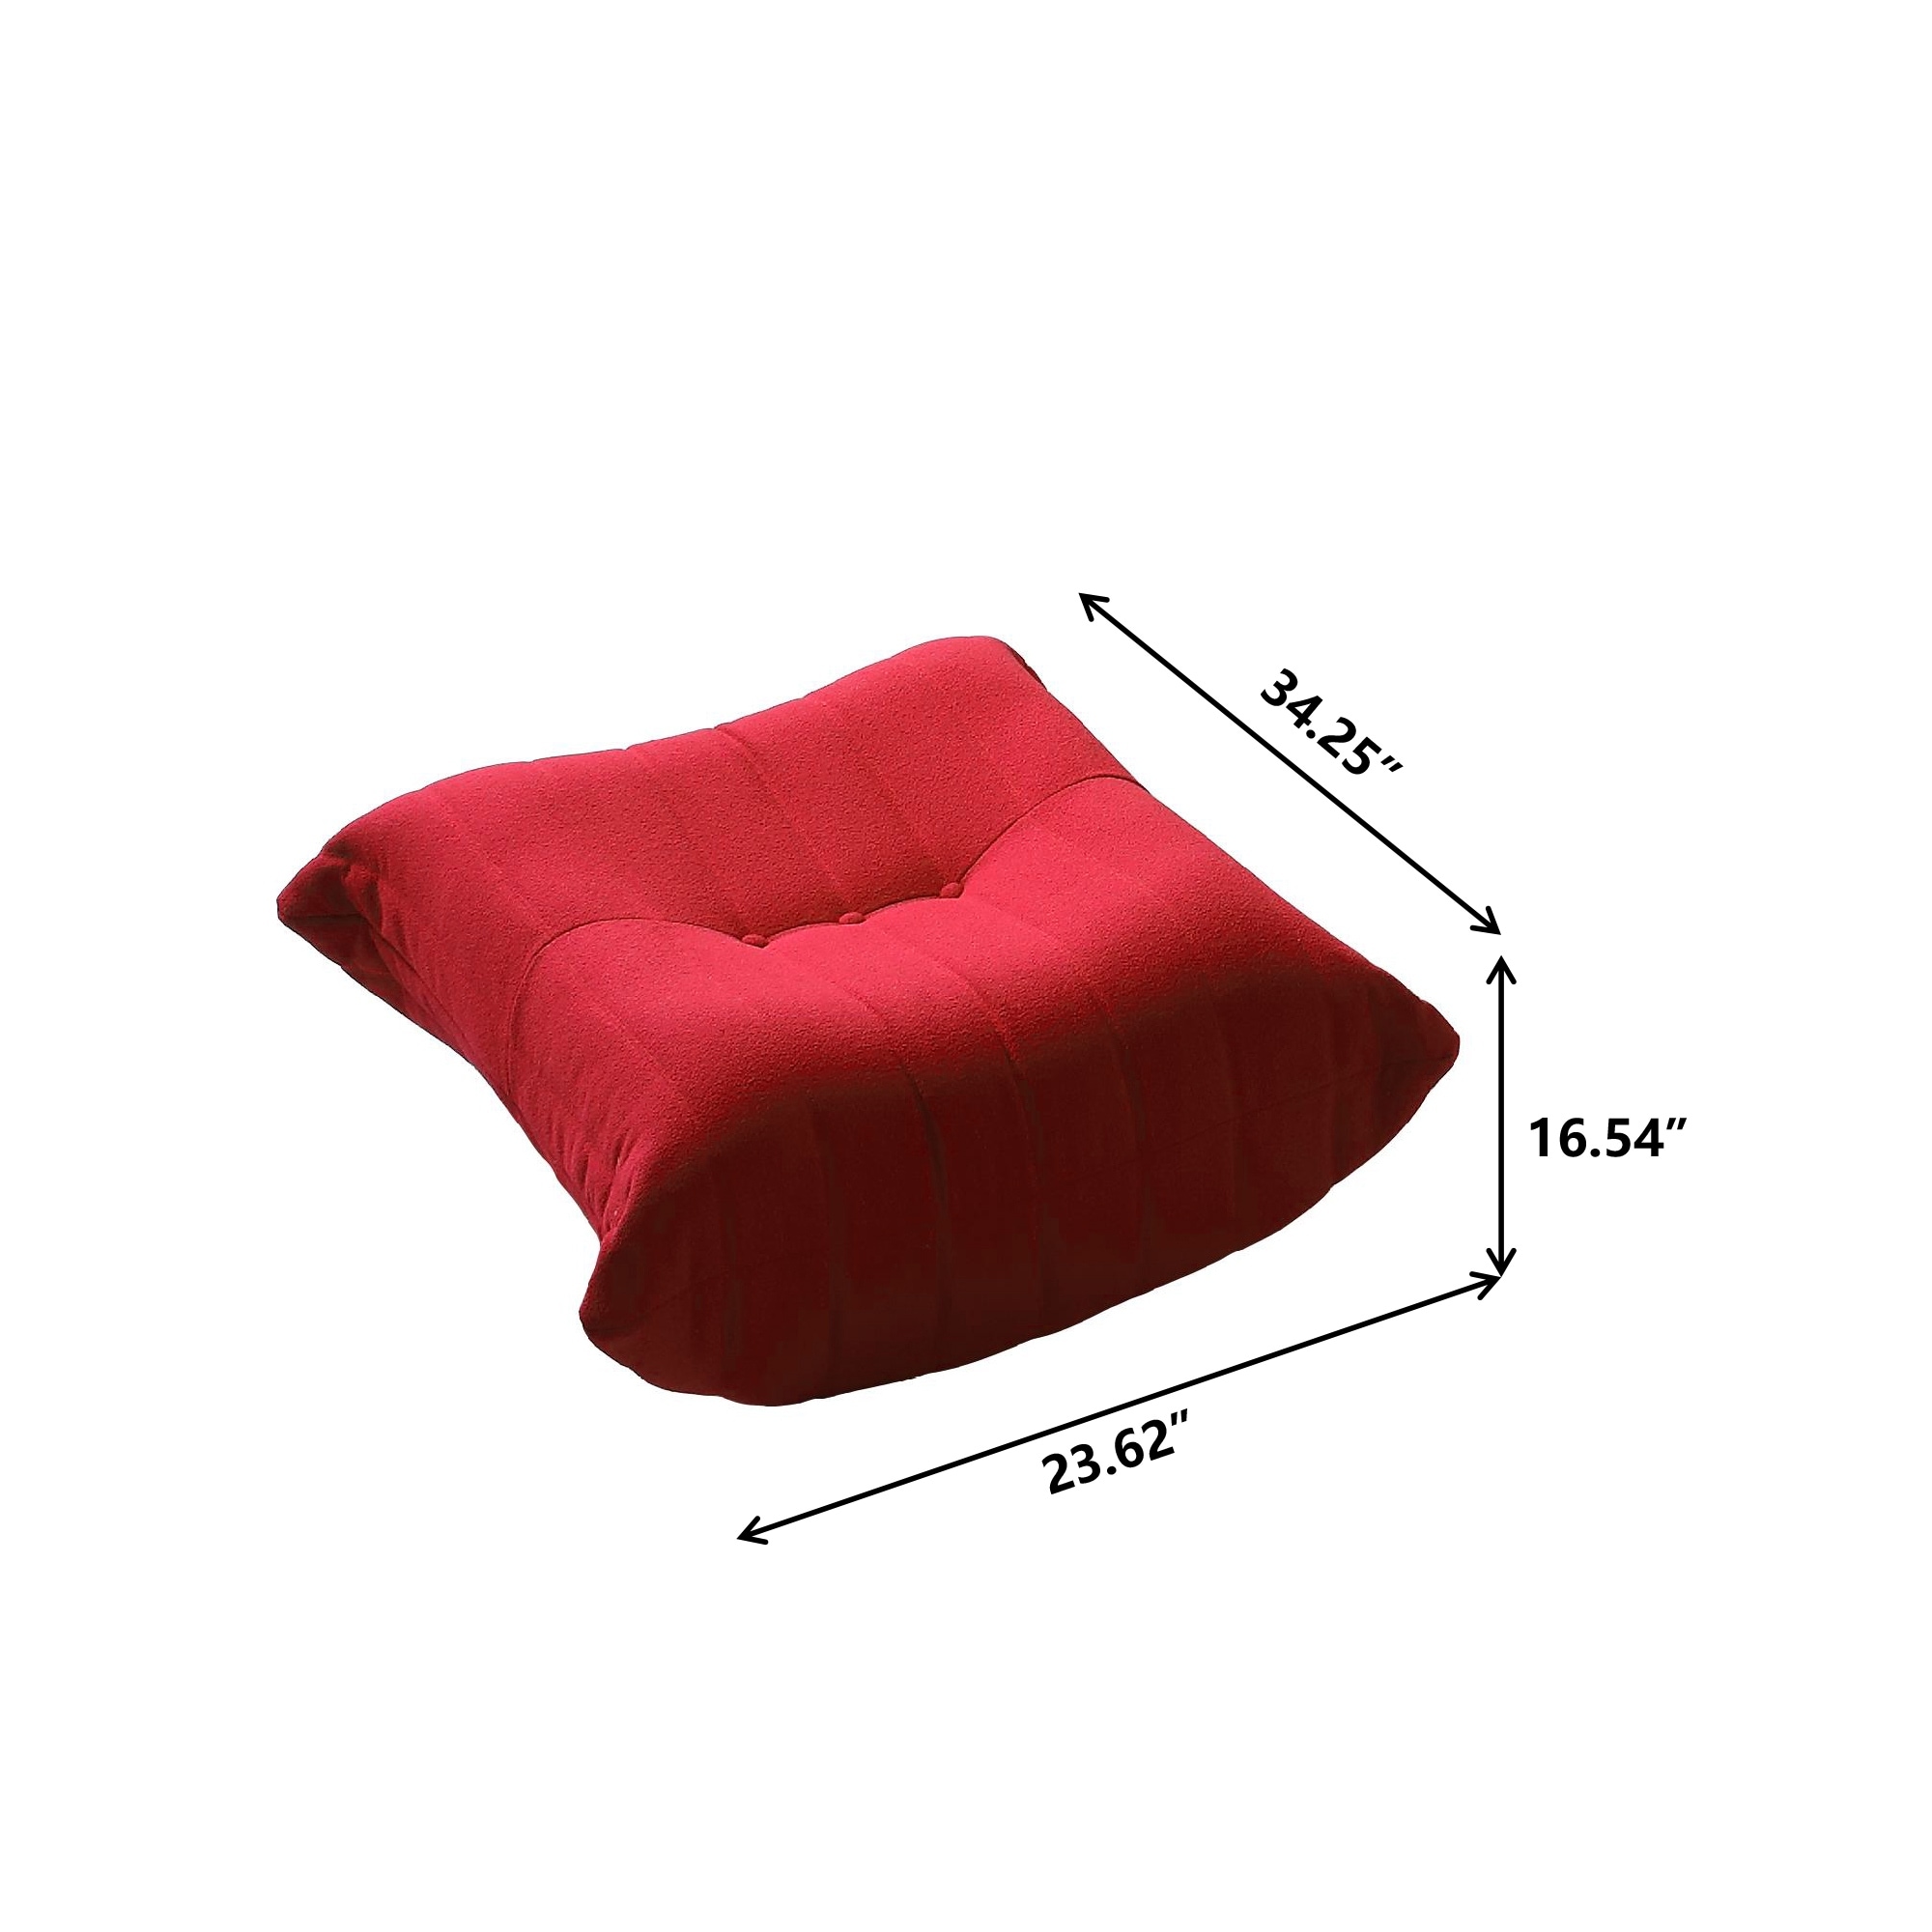 Teddy Fabric Lazy Sofa Floor Couch Bean Bag Chair for Living Room - On Sale  - Bed Bath & Beyond - 37186499